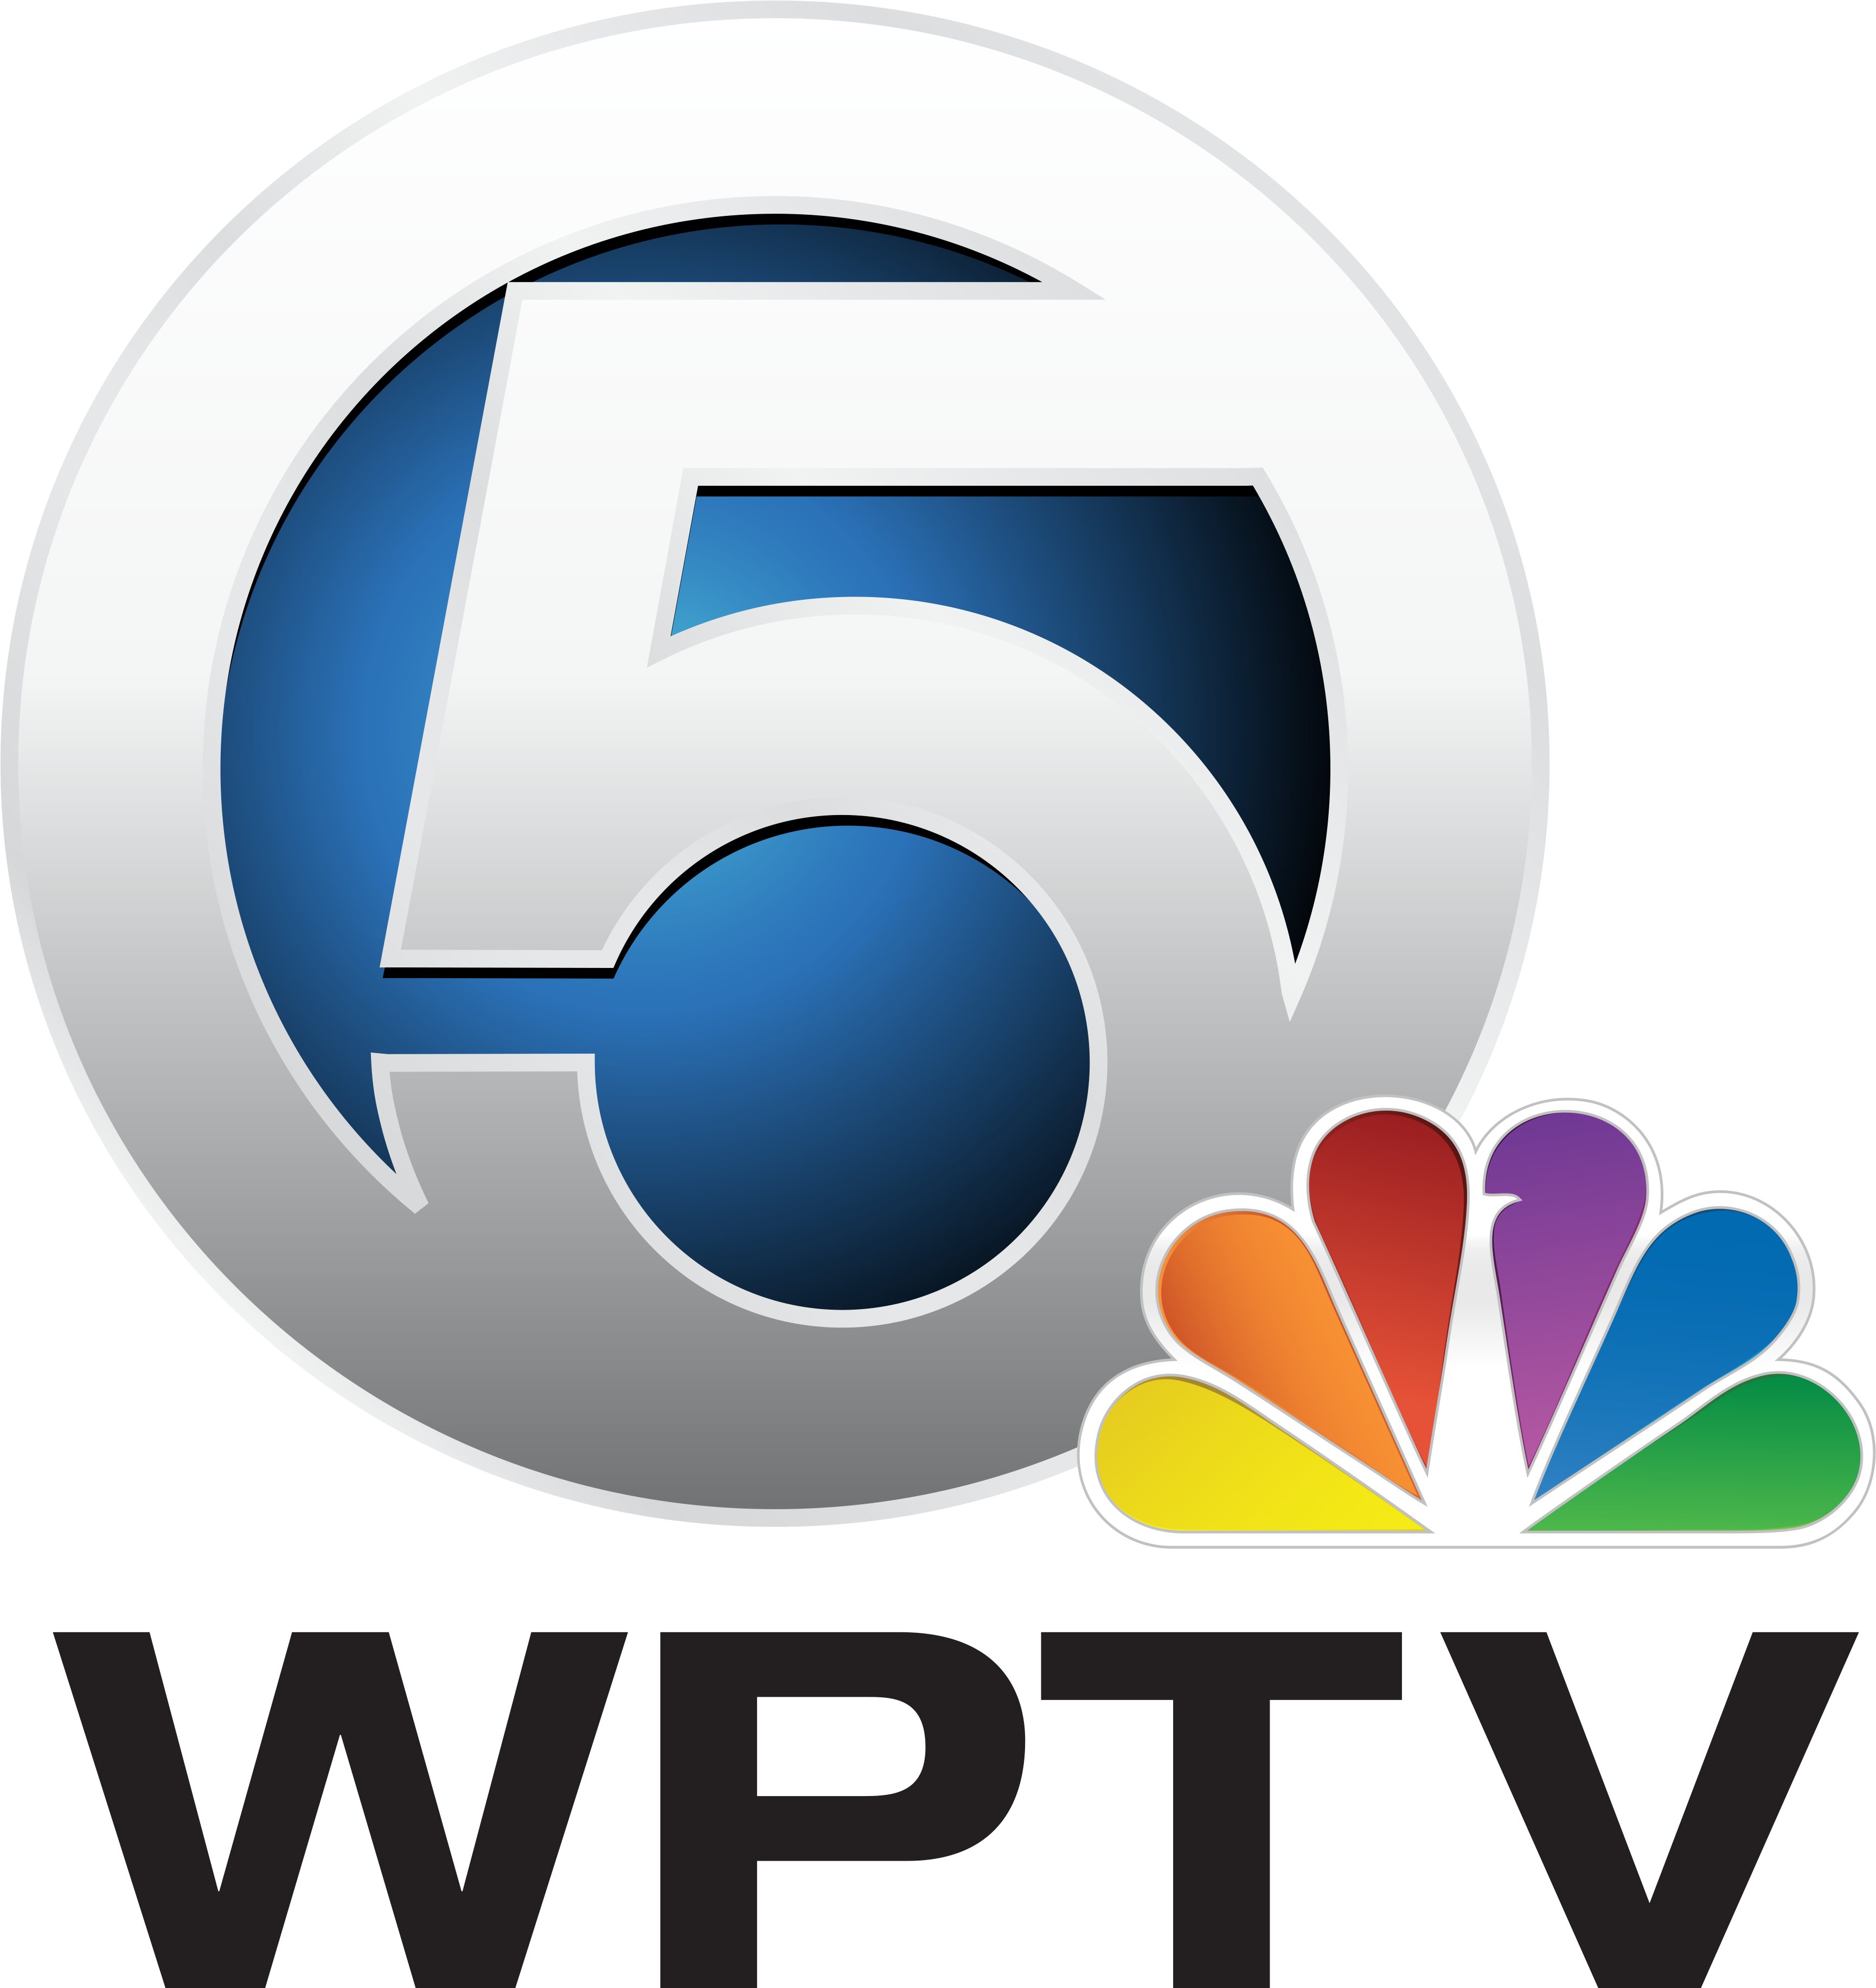 Wptv News Channel 5 (3474x3665)